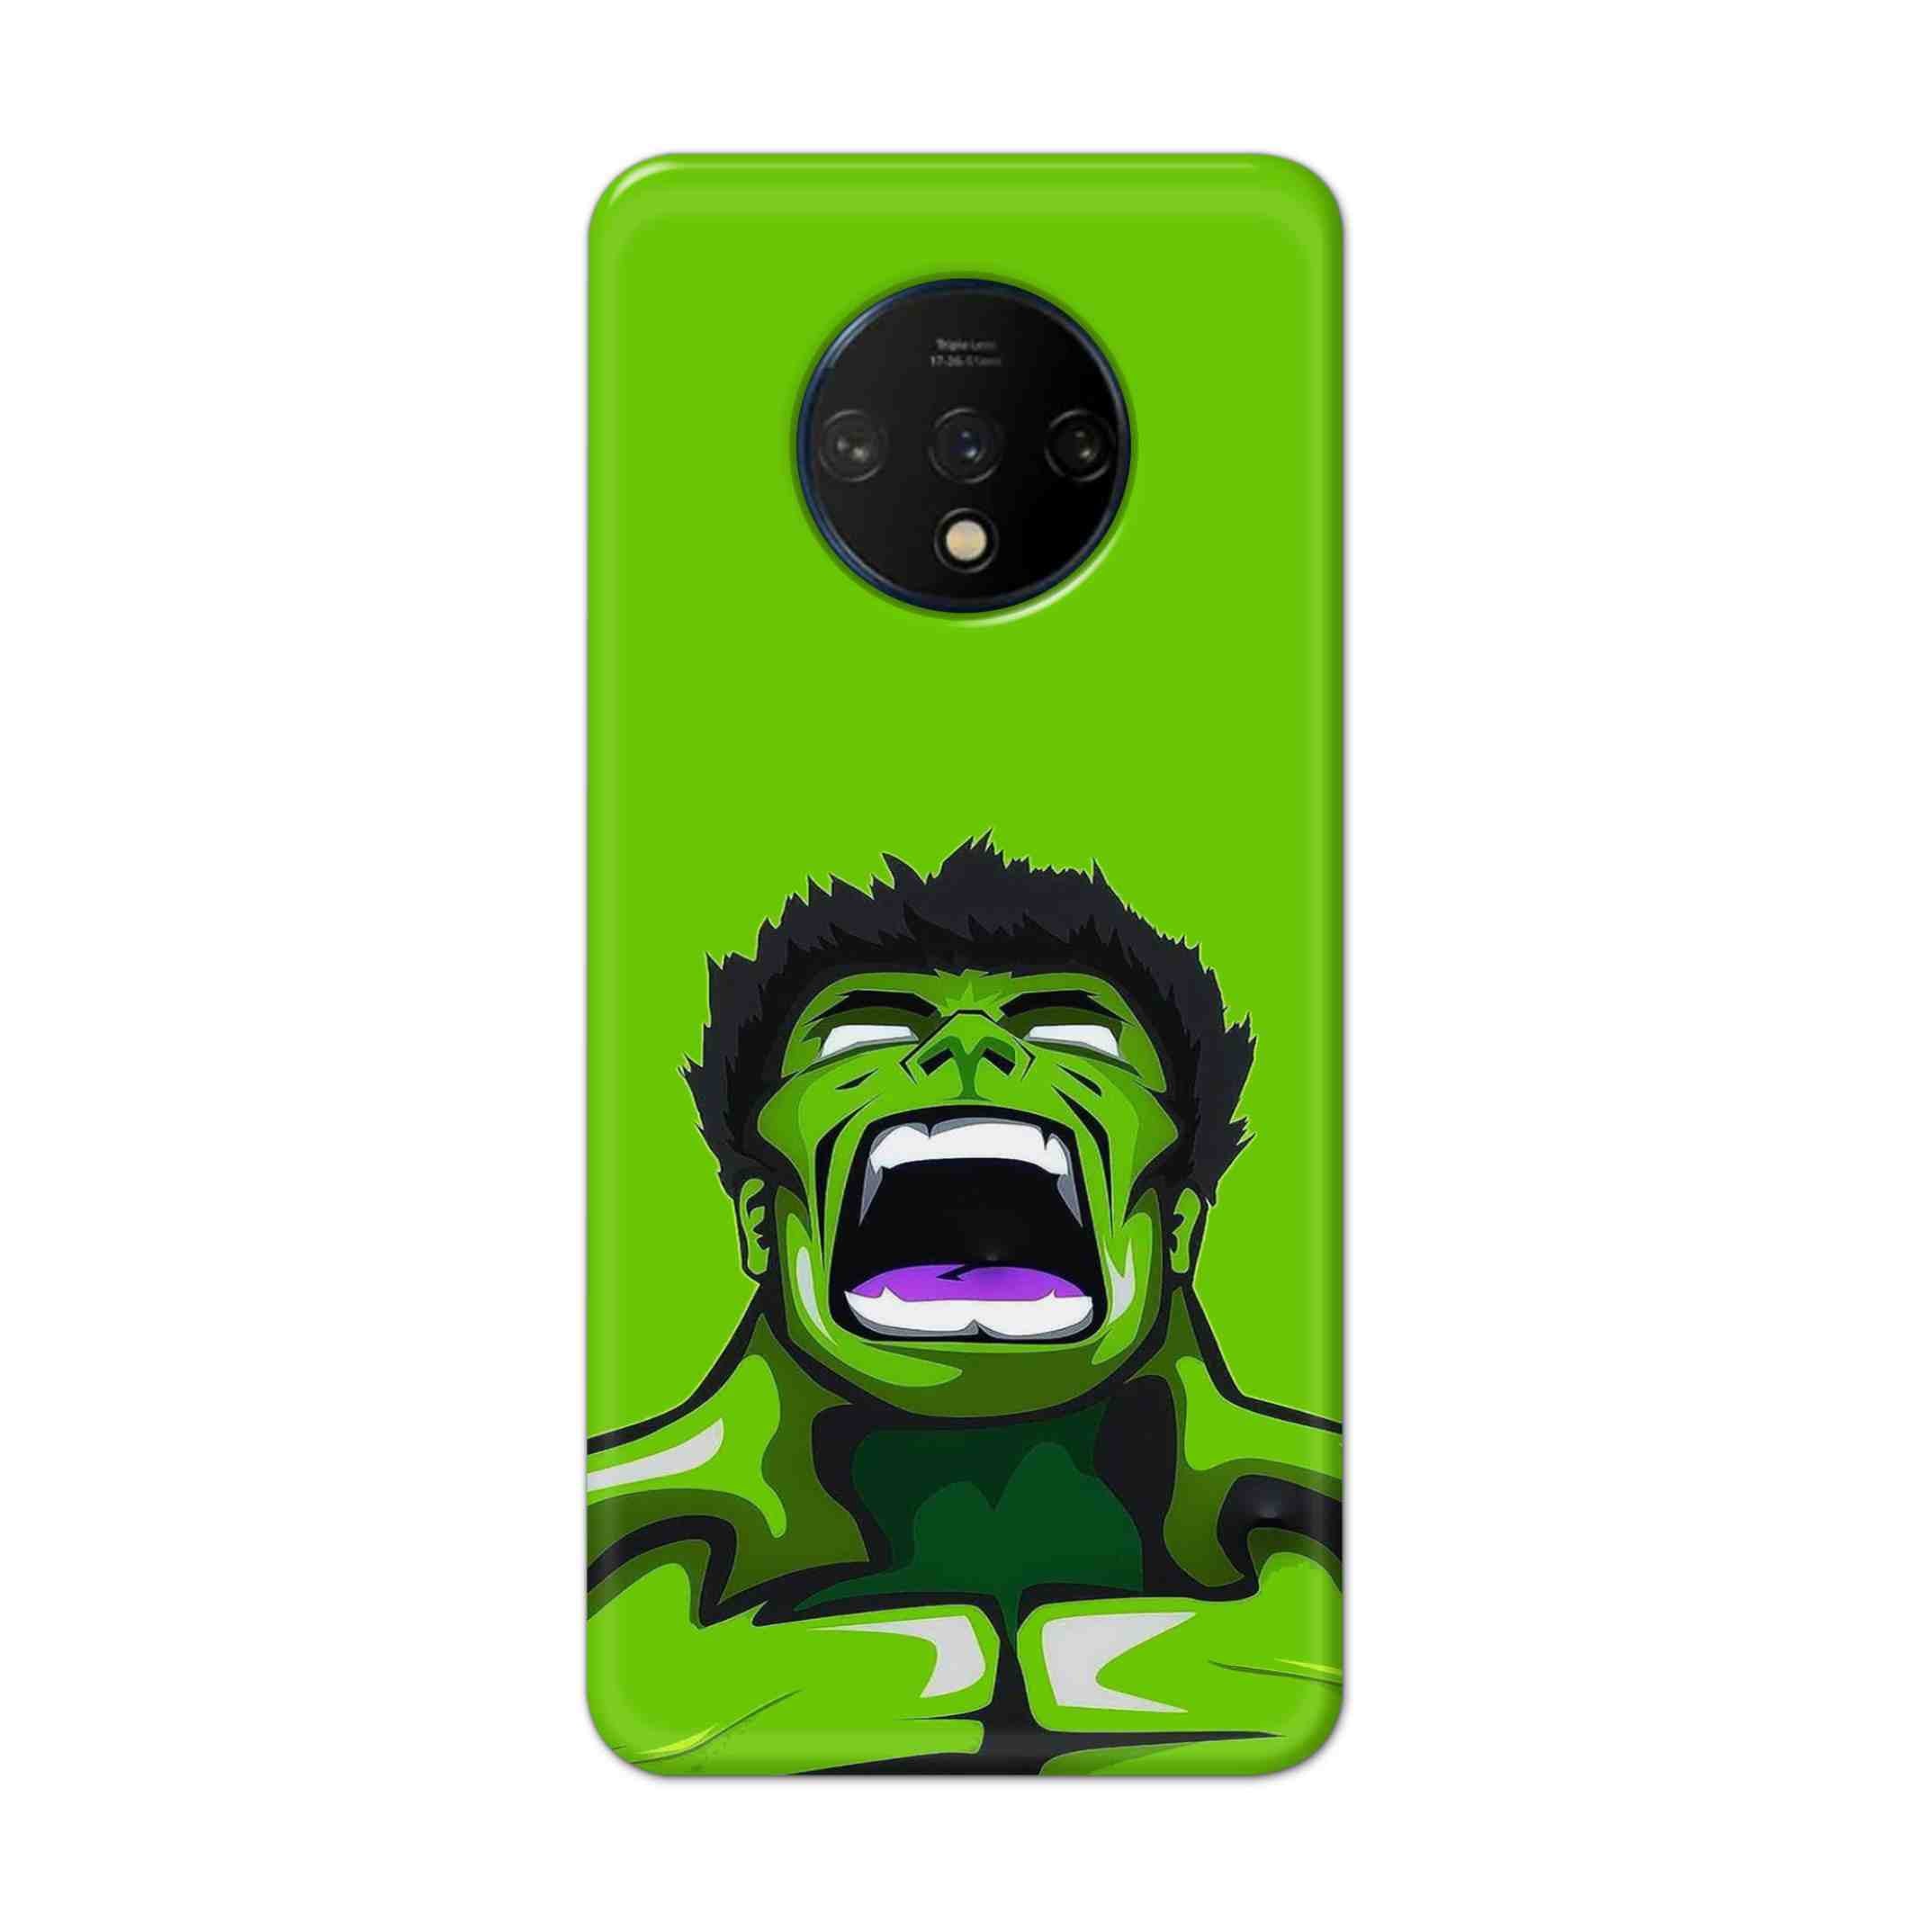 Buy Green Hulk Hard Back Mobile Phone Case Cover For OnePlus 7T Online